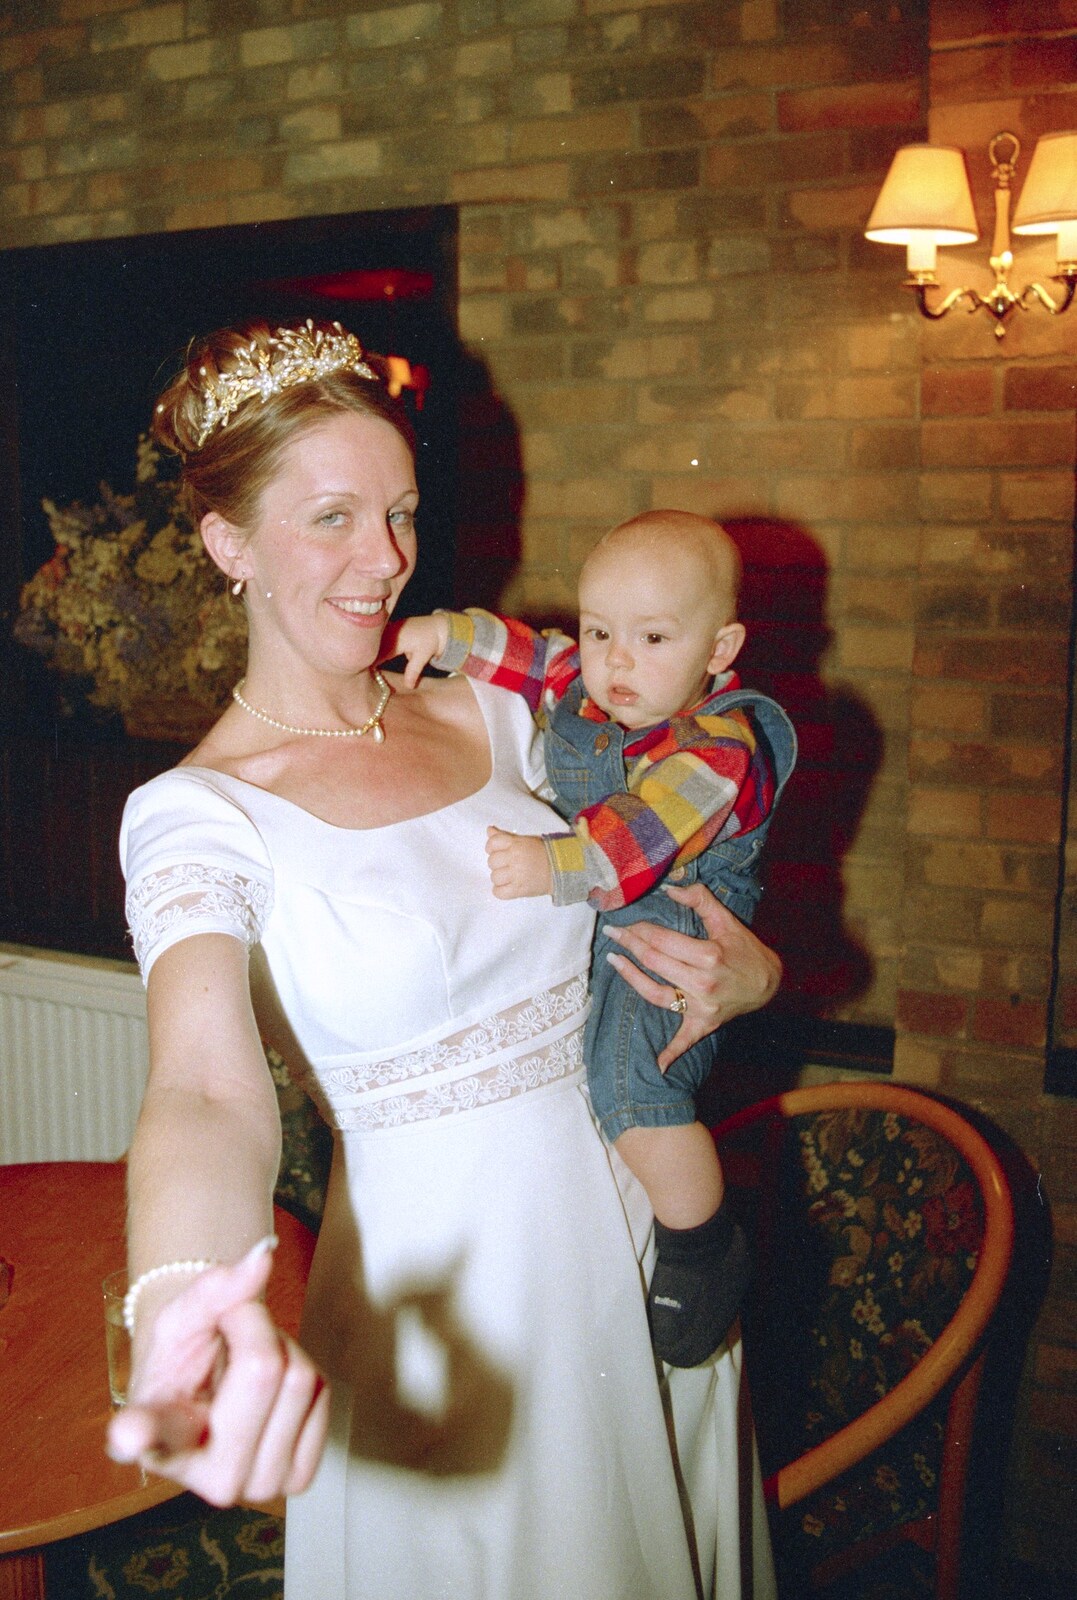 Paula borrows Dave-sprog for a bit from Paula's 3G Lab Wedding Reception, Huntingdon, Cambridgeshire - 4th September 2000